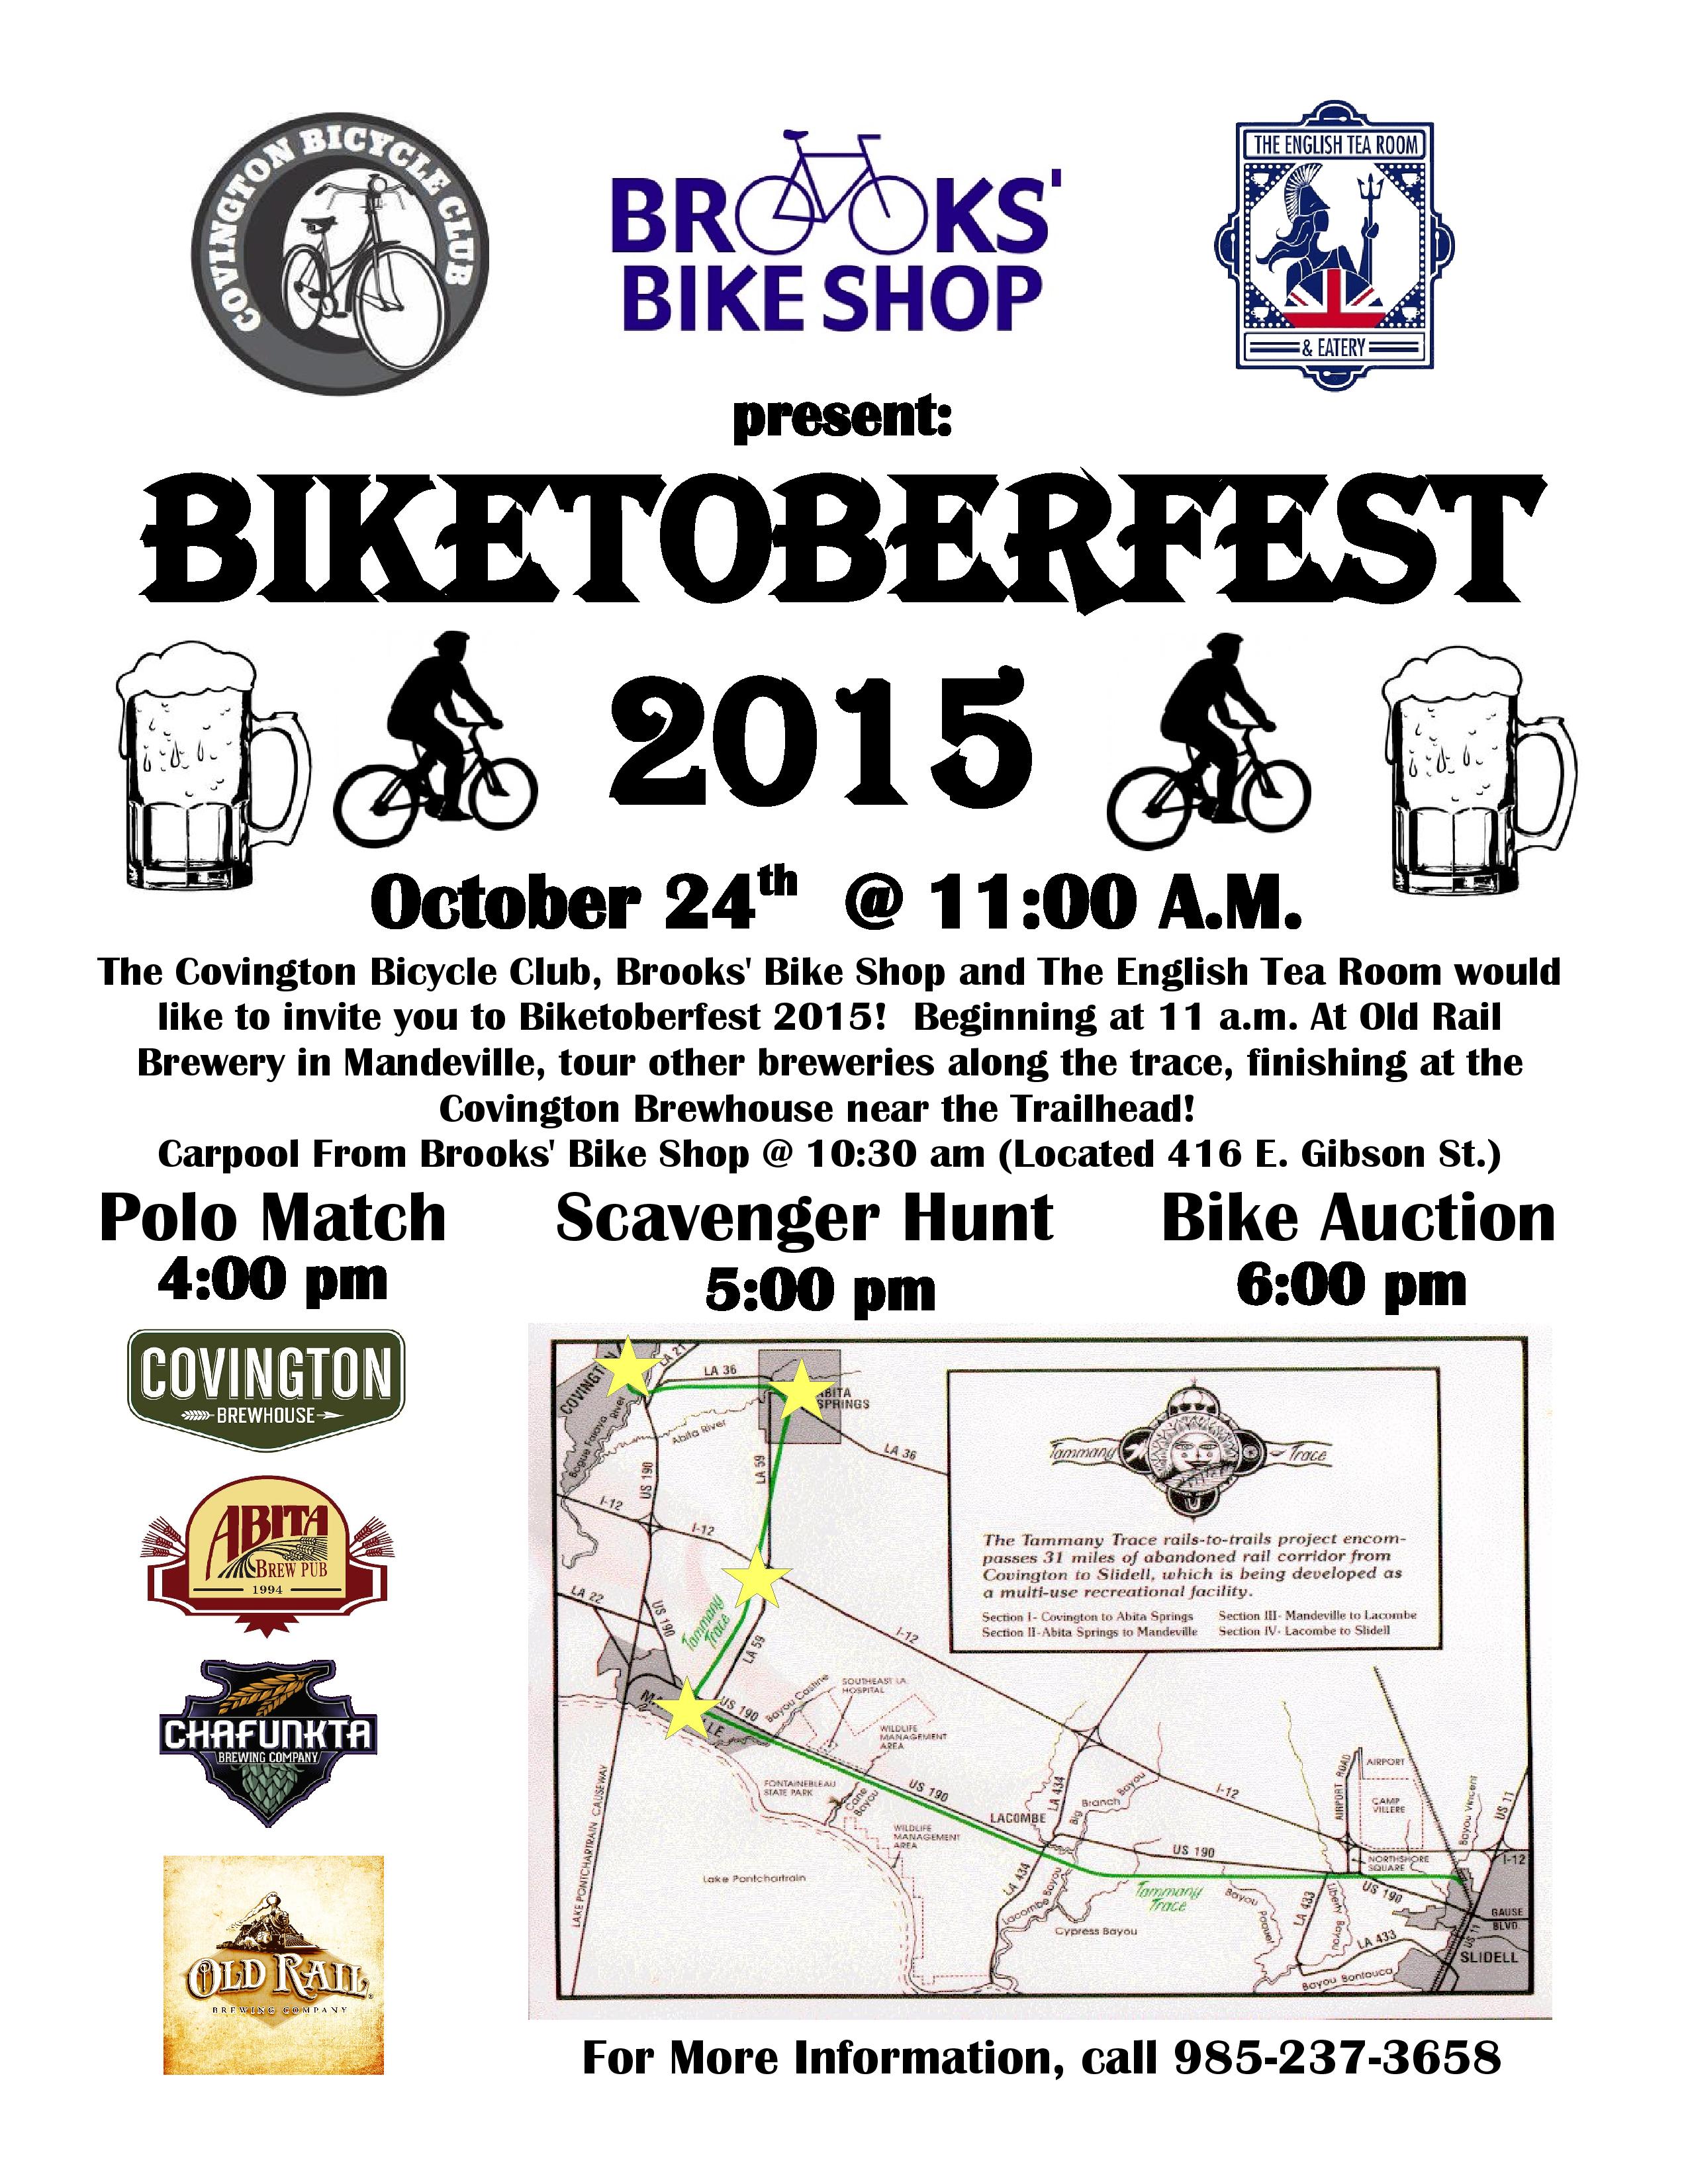 Biketoberfest is this Saturday, October 24, 2015